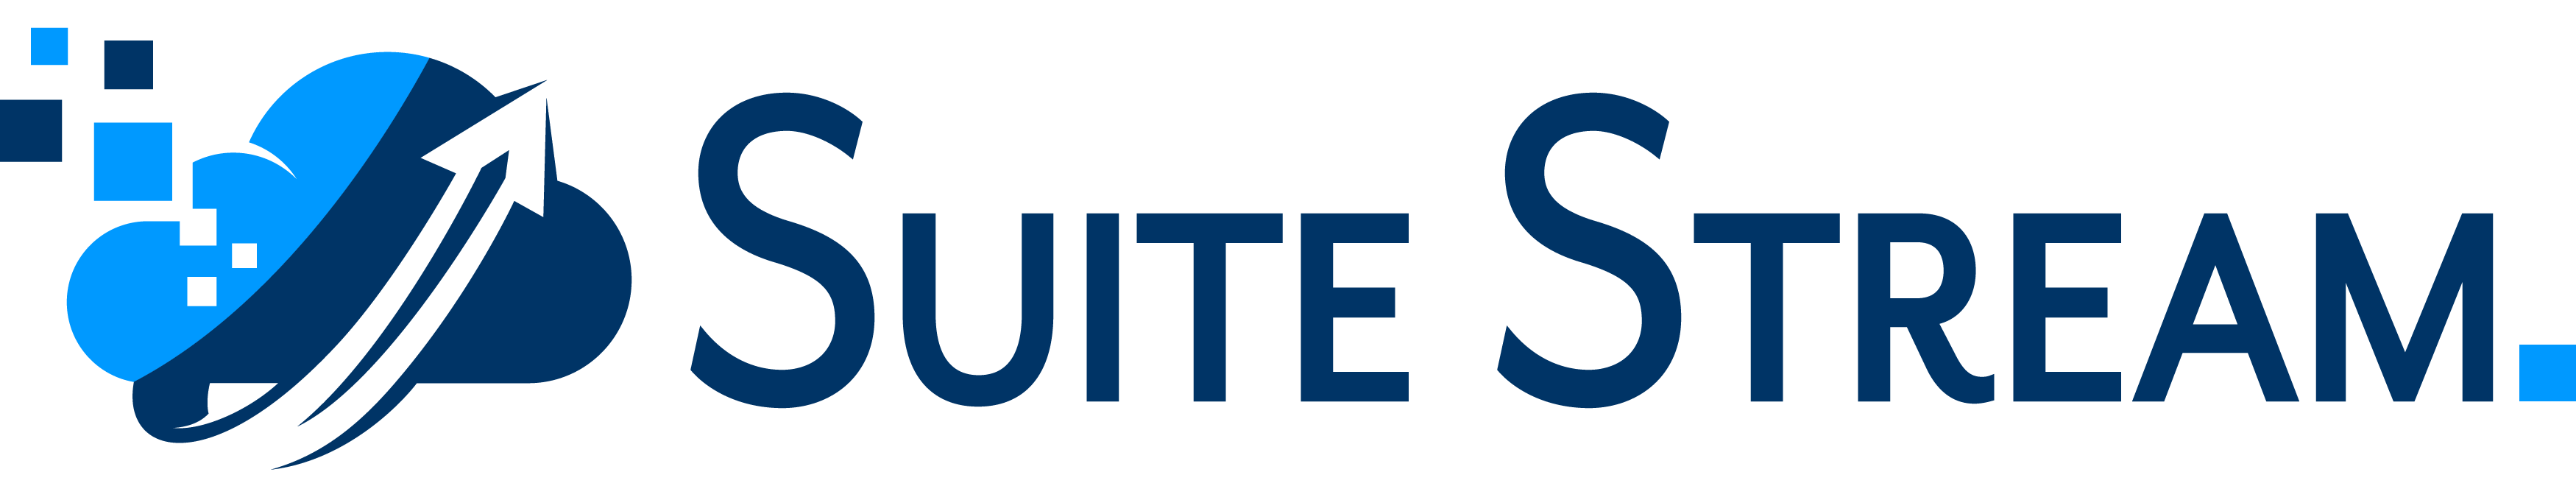 SuiteStream - the NetSuite replication service